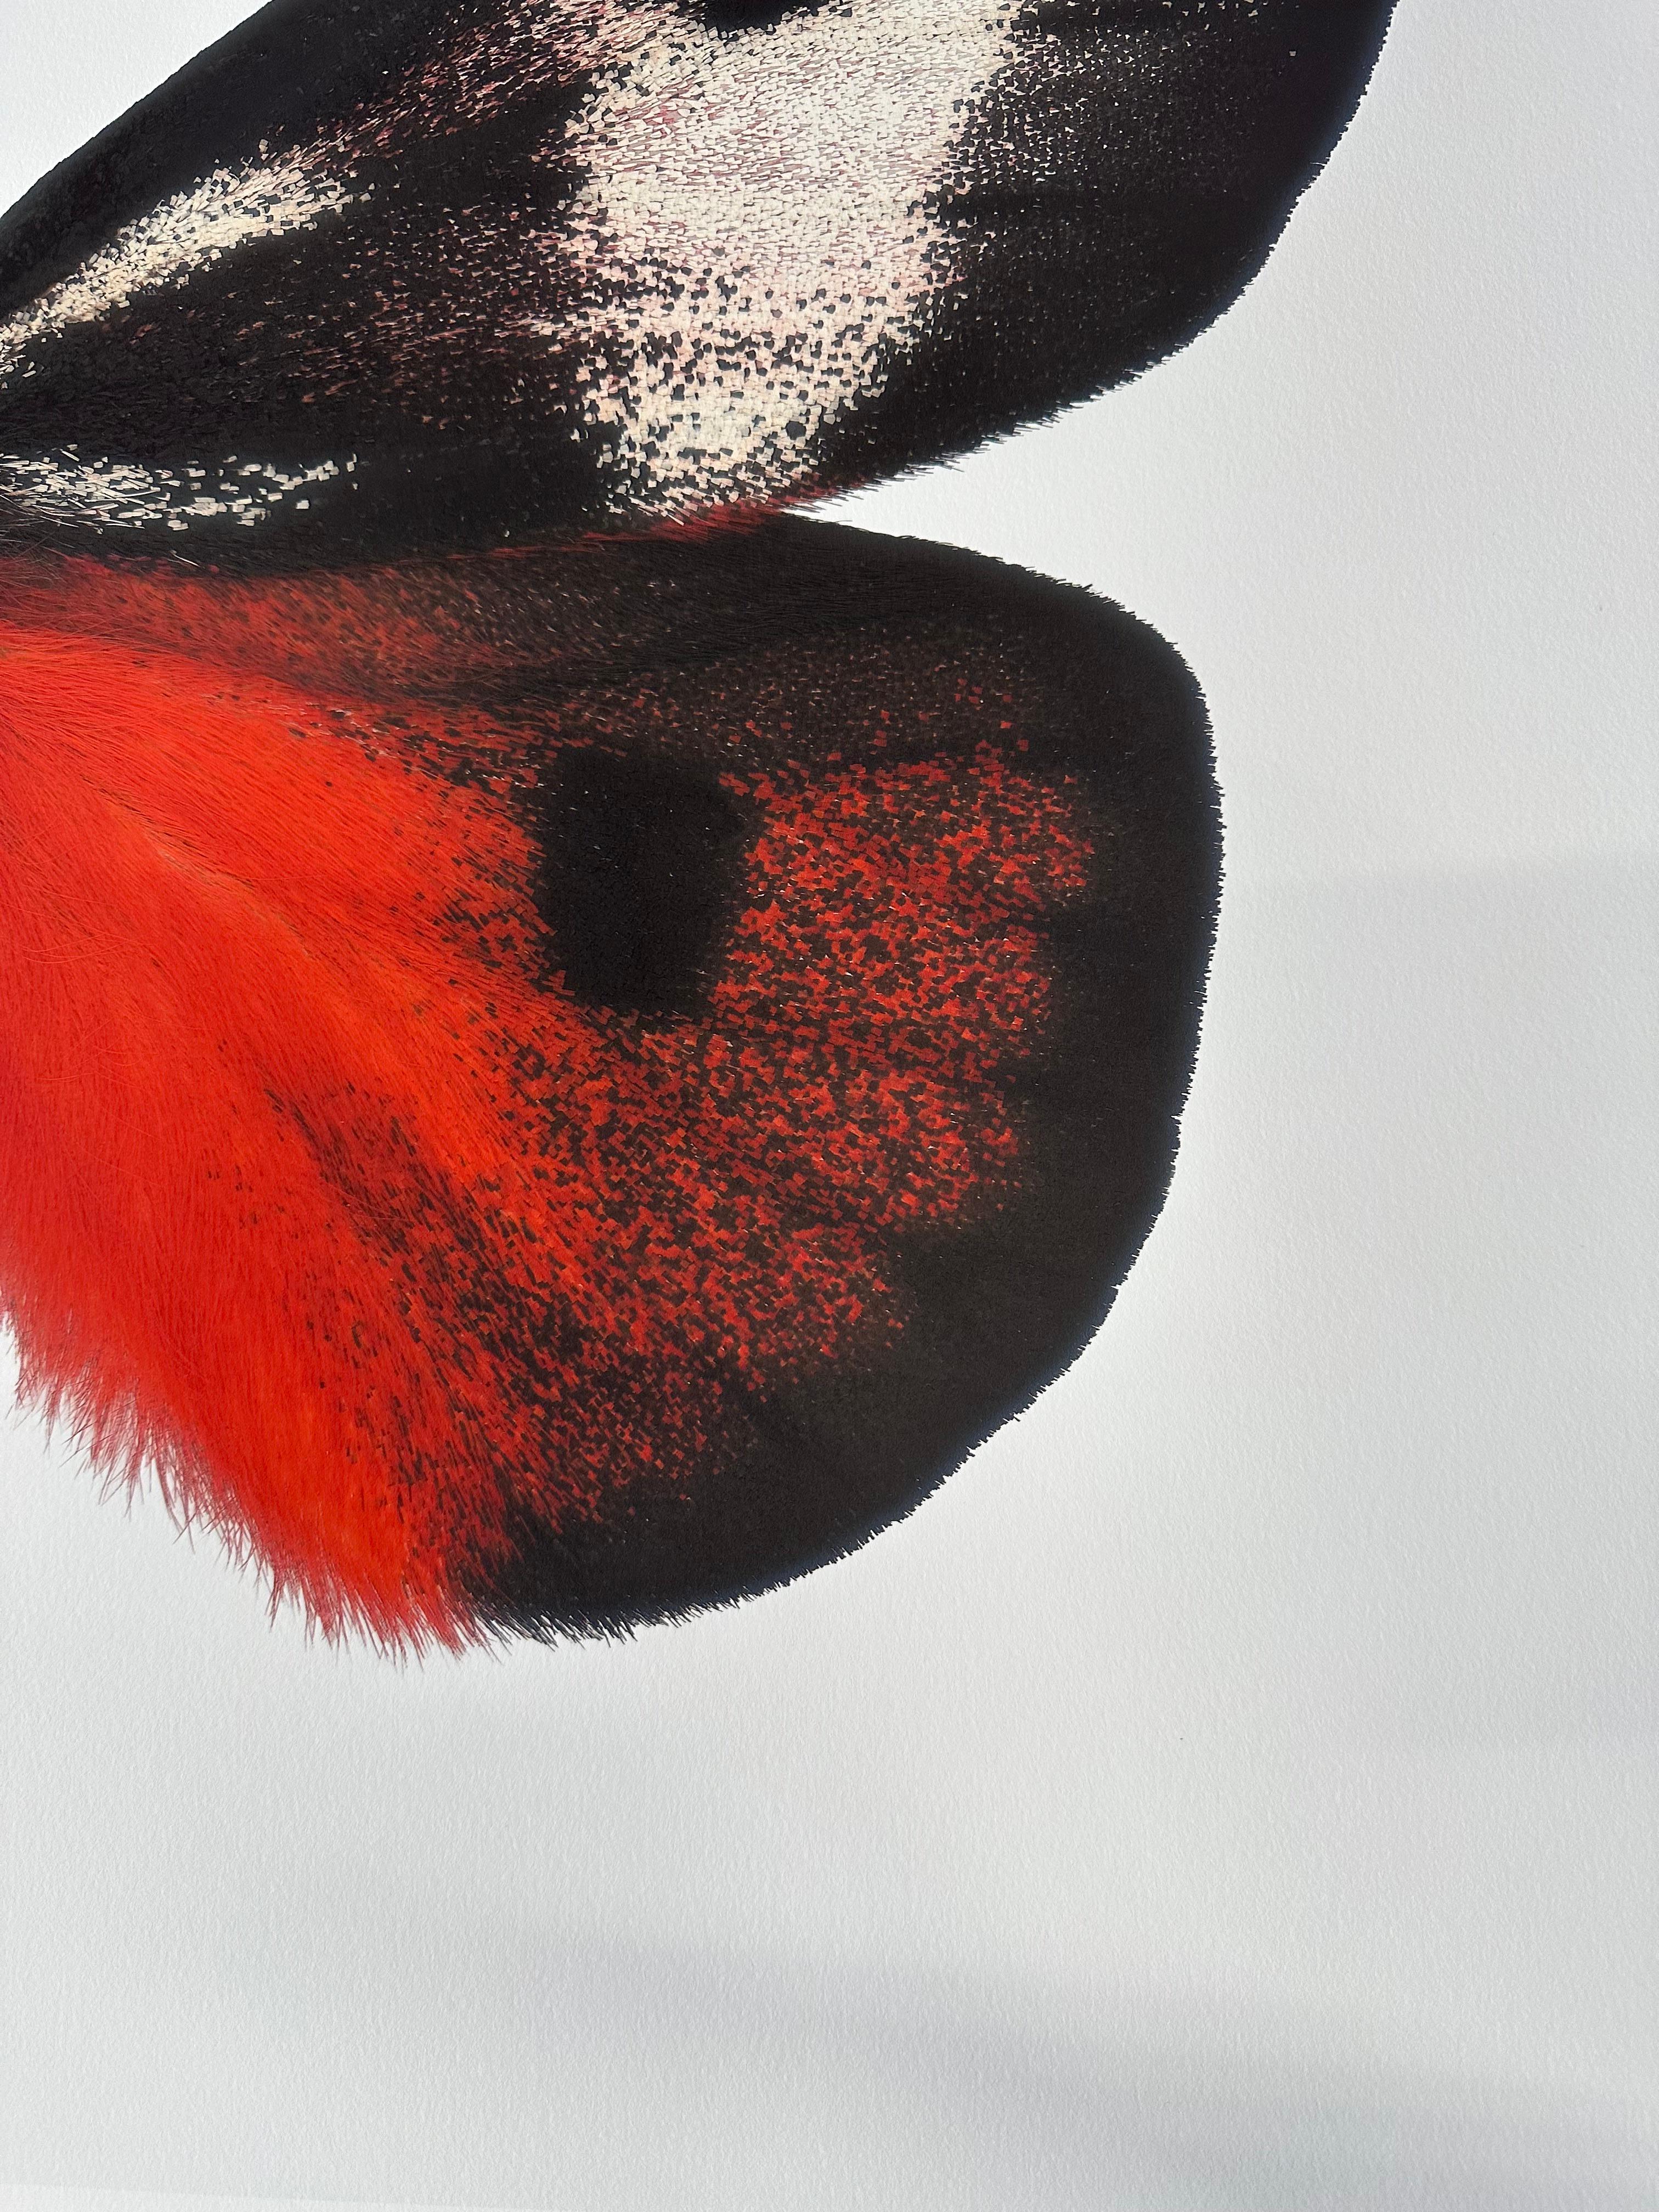 Hemileuca Electra, rot-orange, schwarz, gelb-weiß Motte Insekt Nature Photograph im Angebot 9